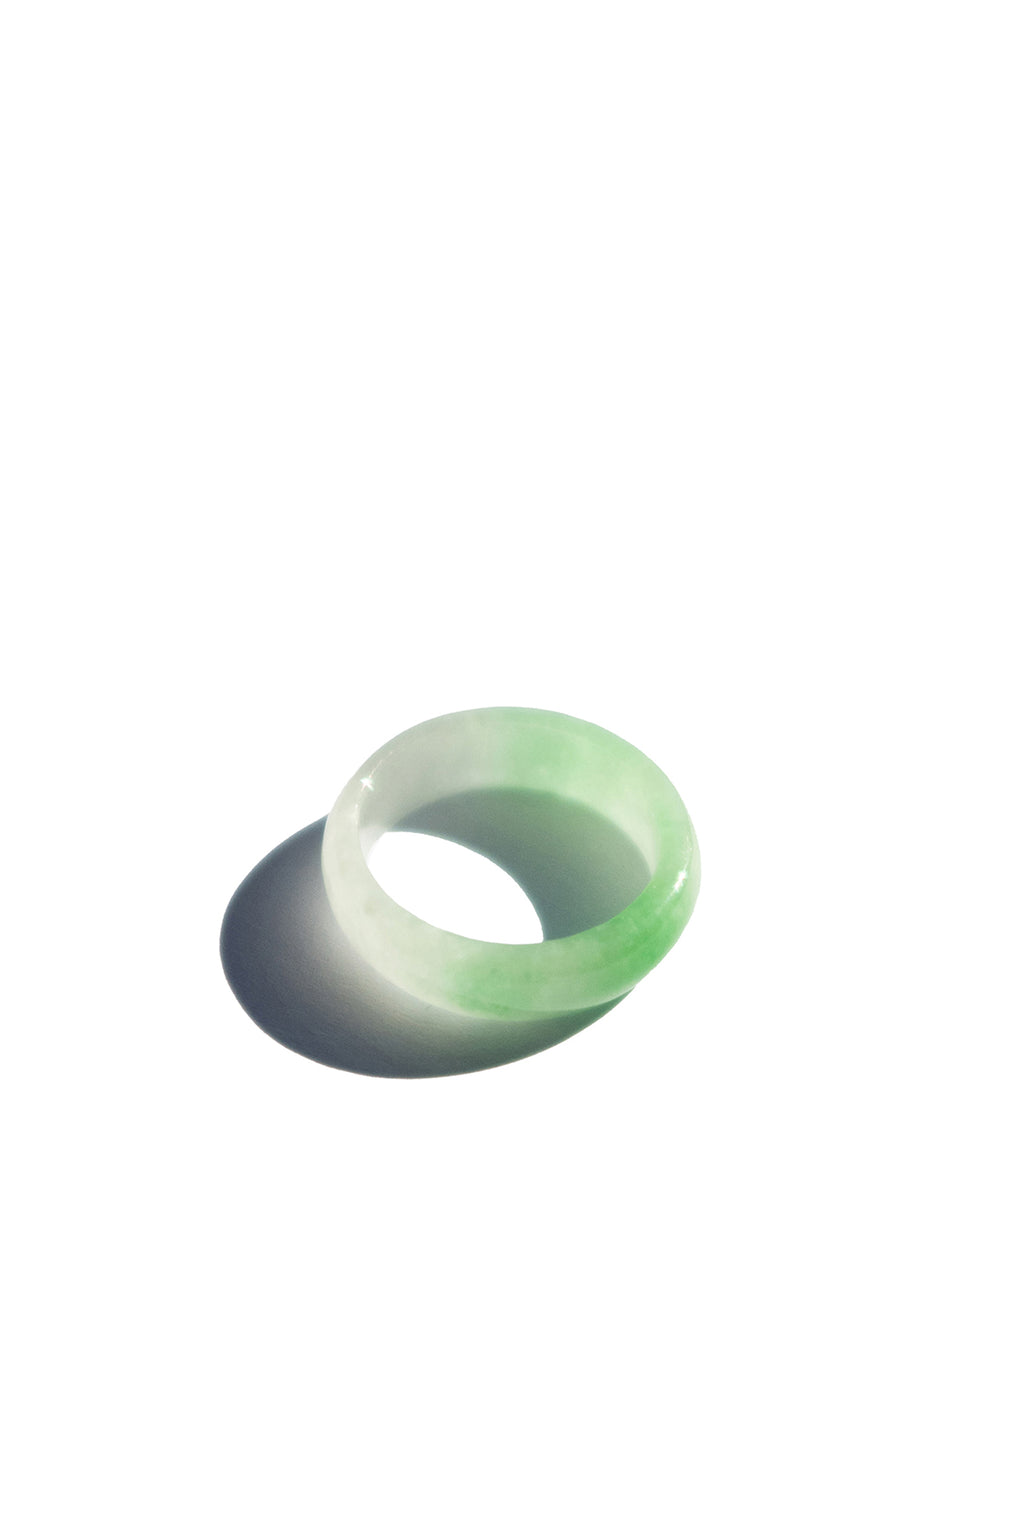 seree-koi-jadeite-ring-in-light-green-and-green-2